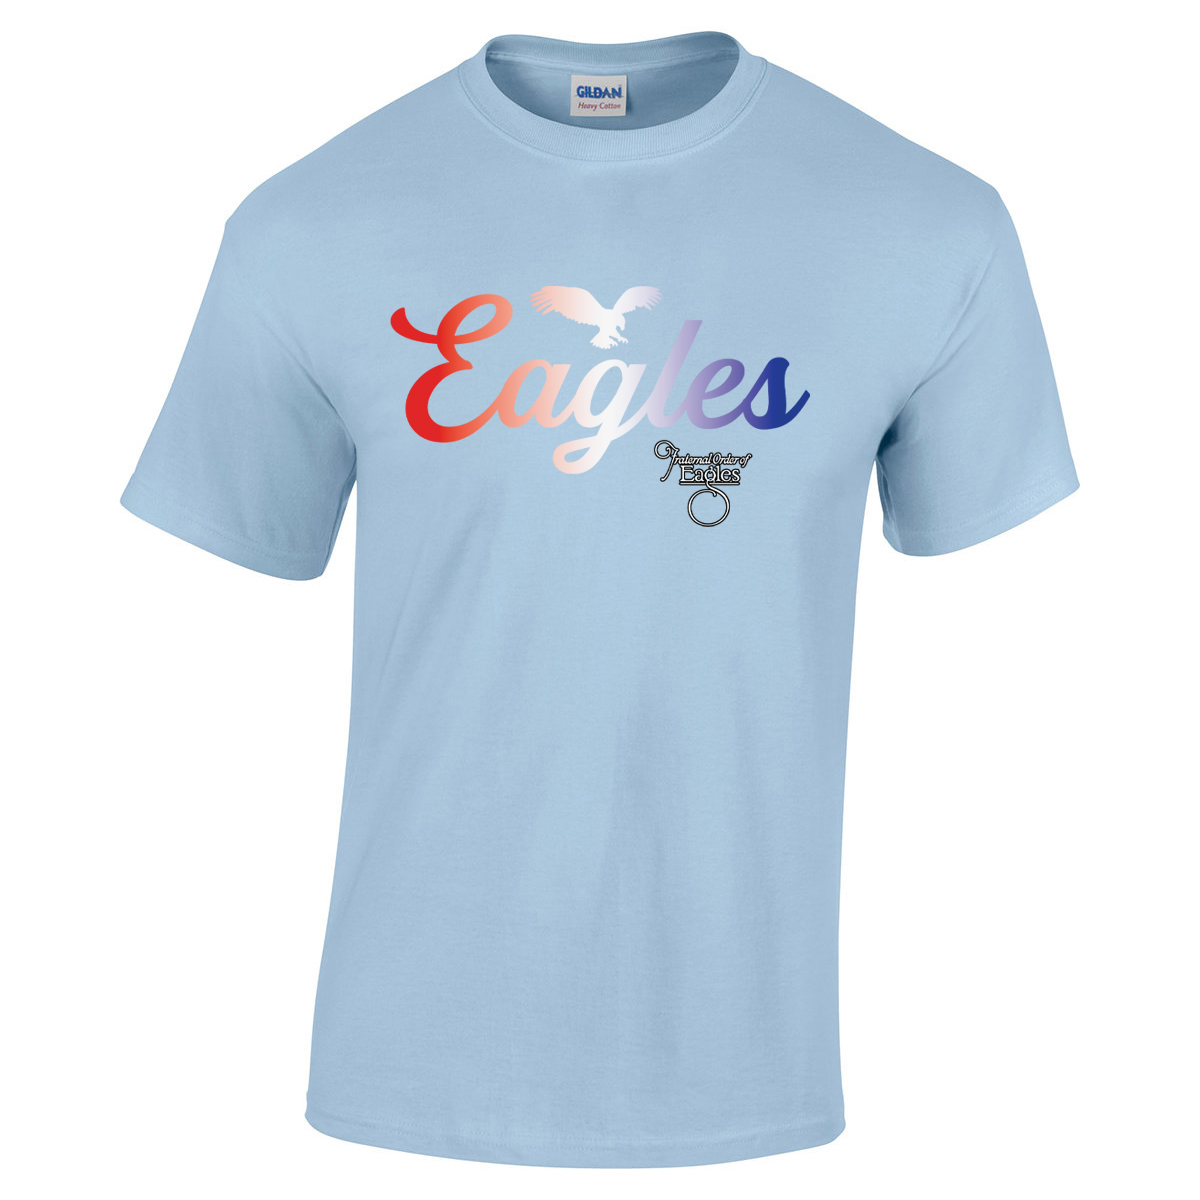 eagles logo shirt